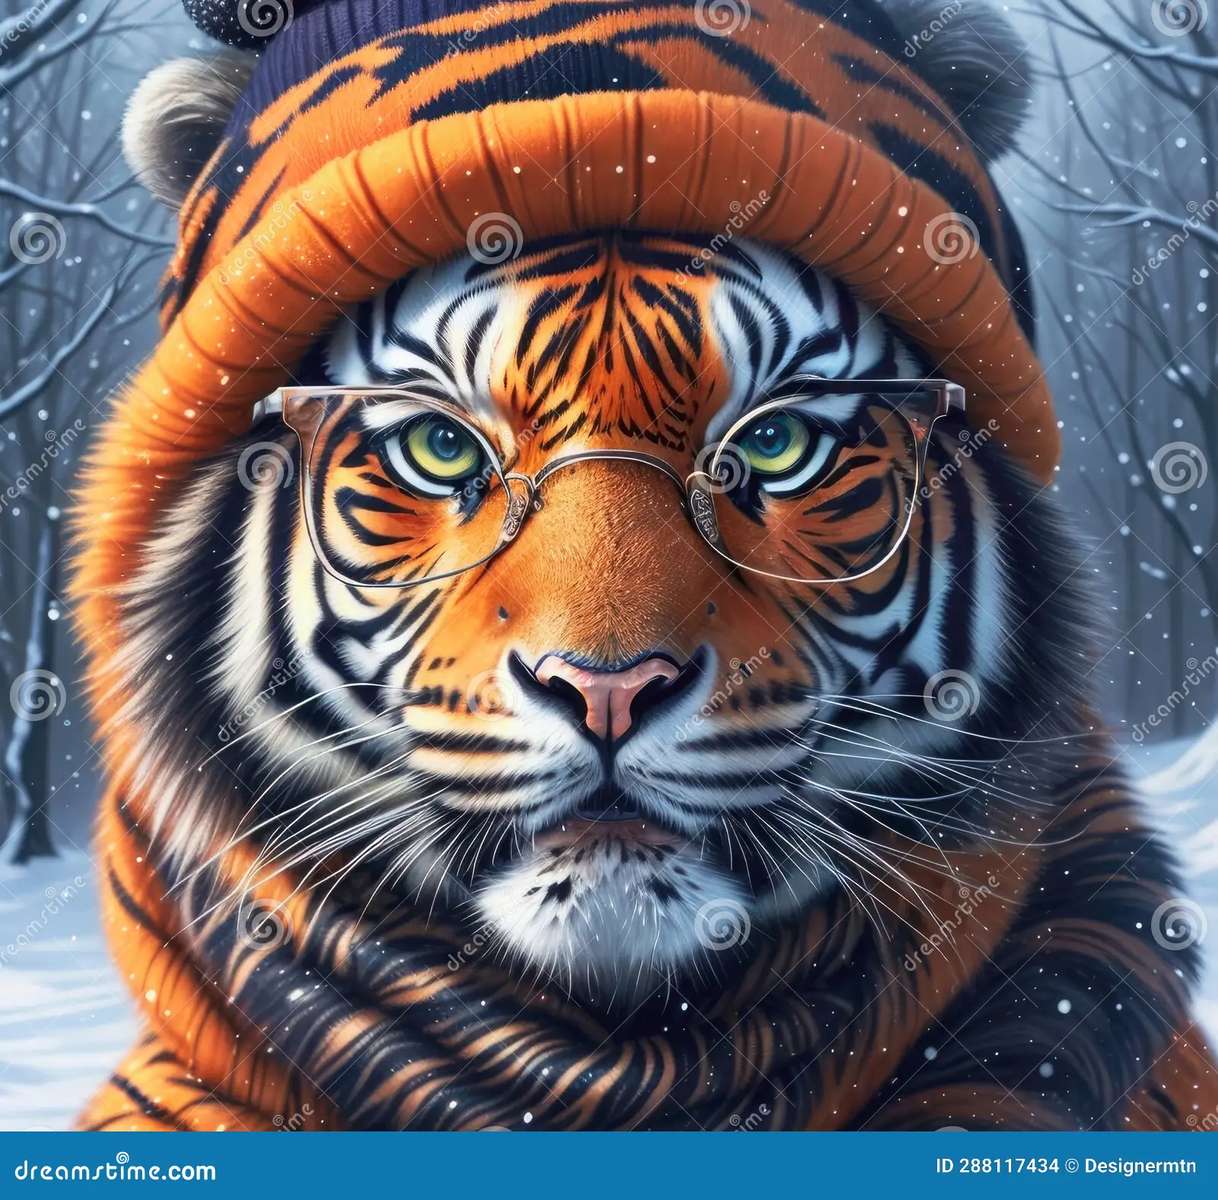 Fotografie cu tigru puzzle online din fotografie